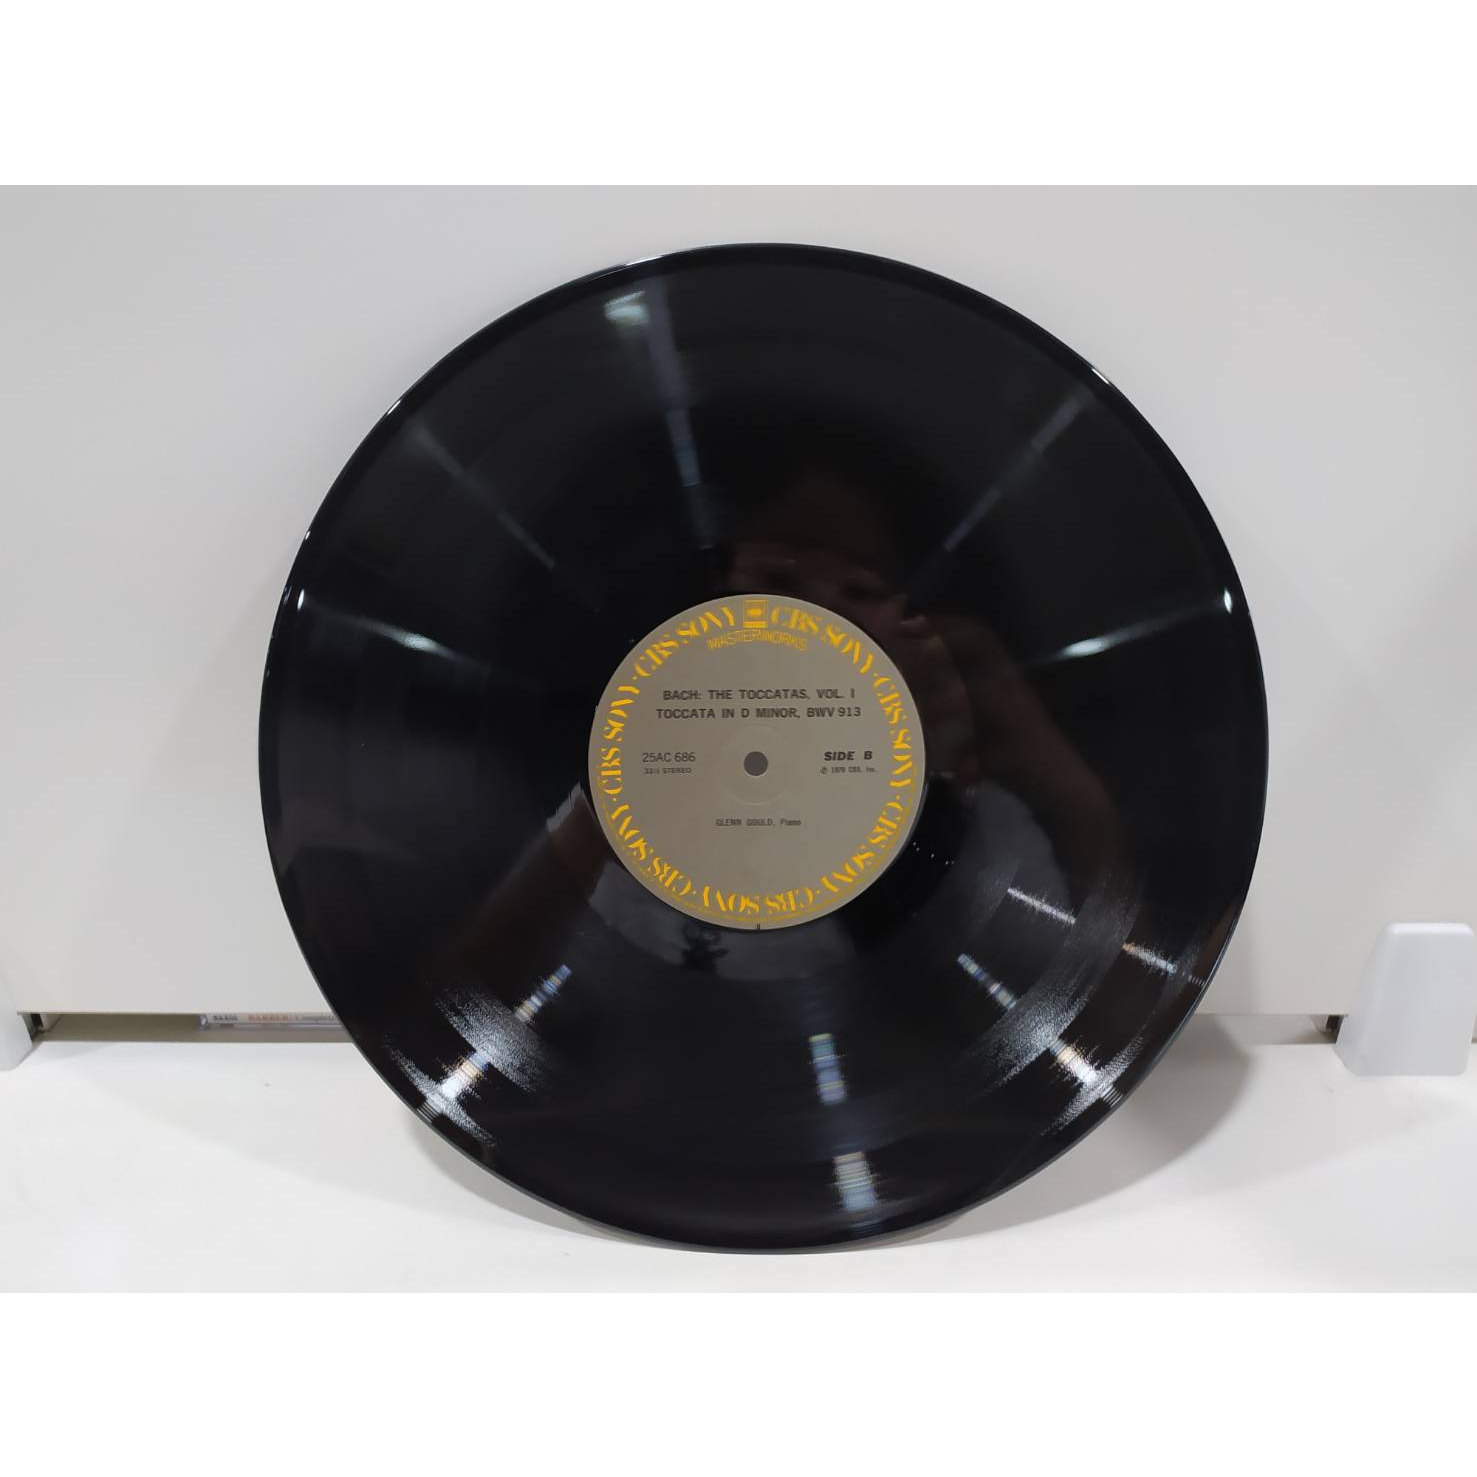 1lp-vinyl-records-แผ่นเสียงไวนิล-glenn-gould-bach-toccatas-vol-1-j10a195